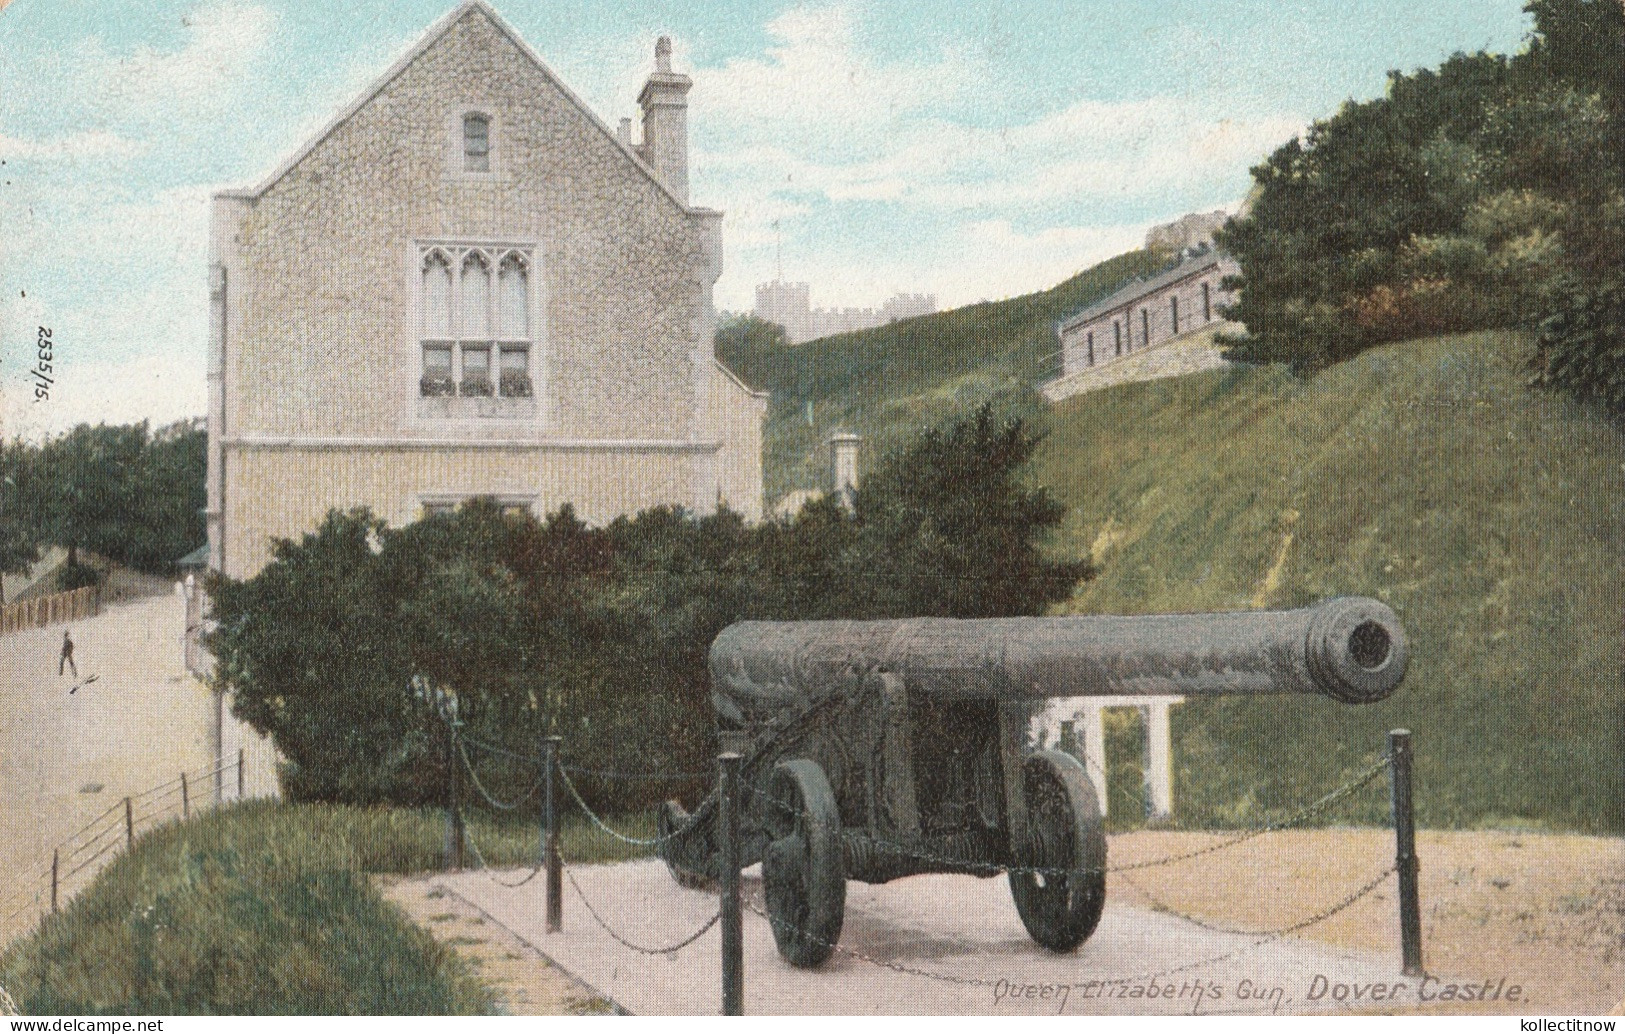 QUEEN ELIZABETHS GUN - DOVER CASTLE - Dover